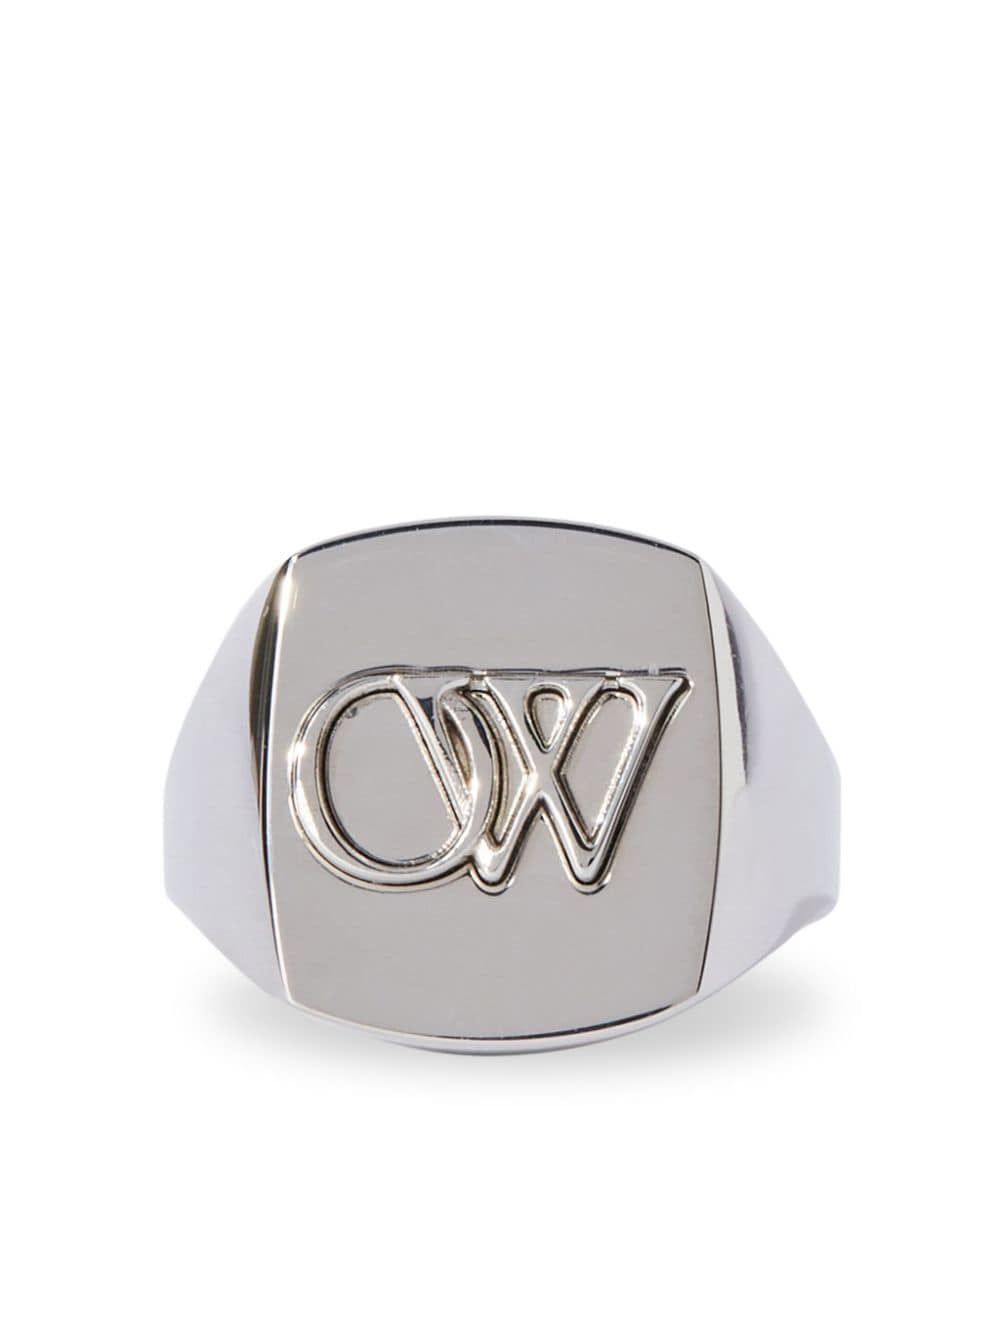 OW-embossed signet ring